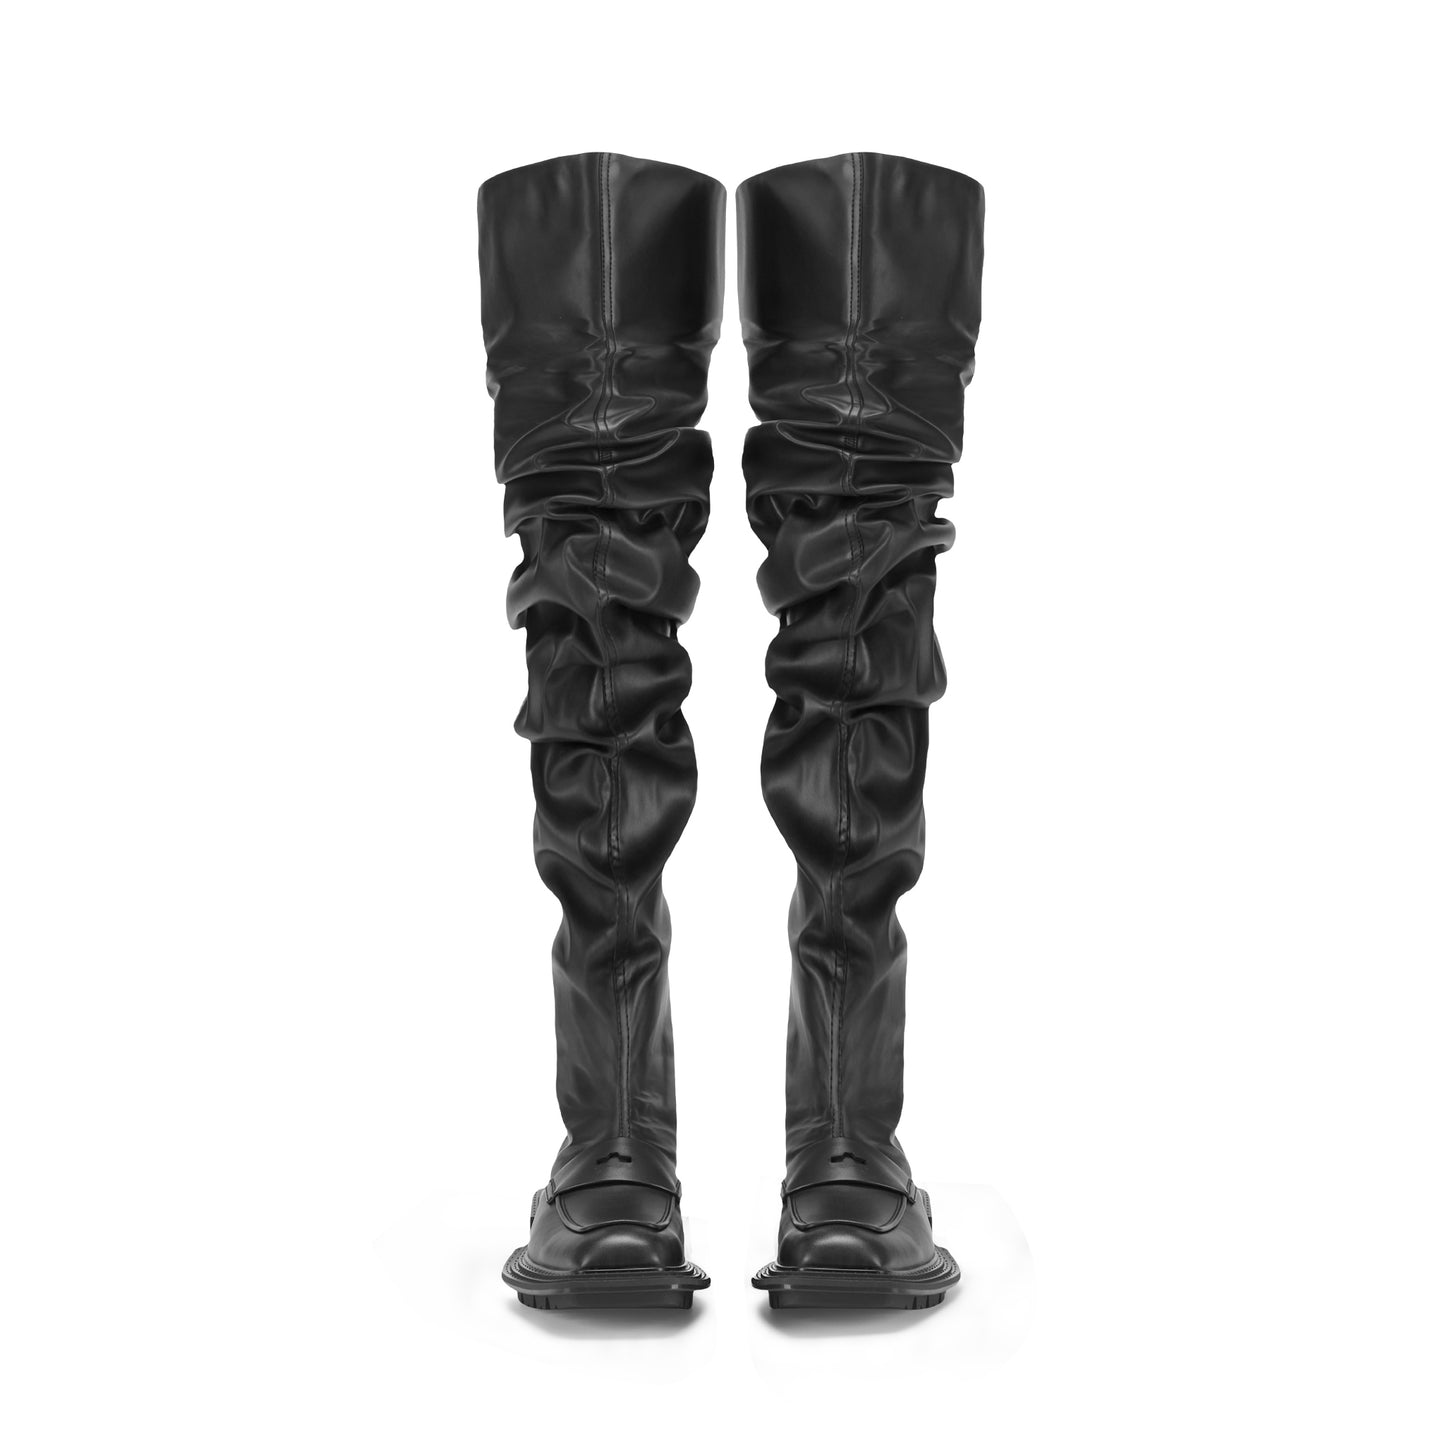 Reel Pug Boots (Black) Pre-order